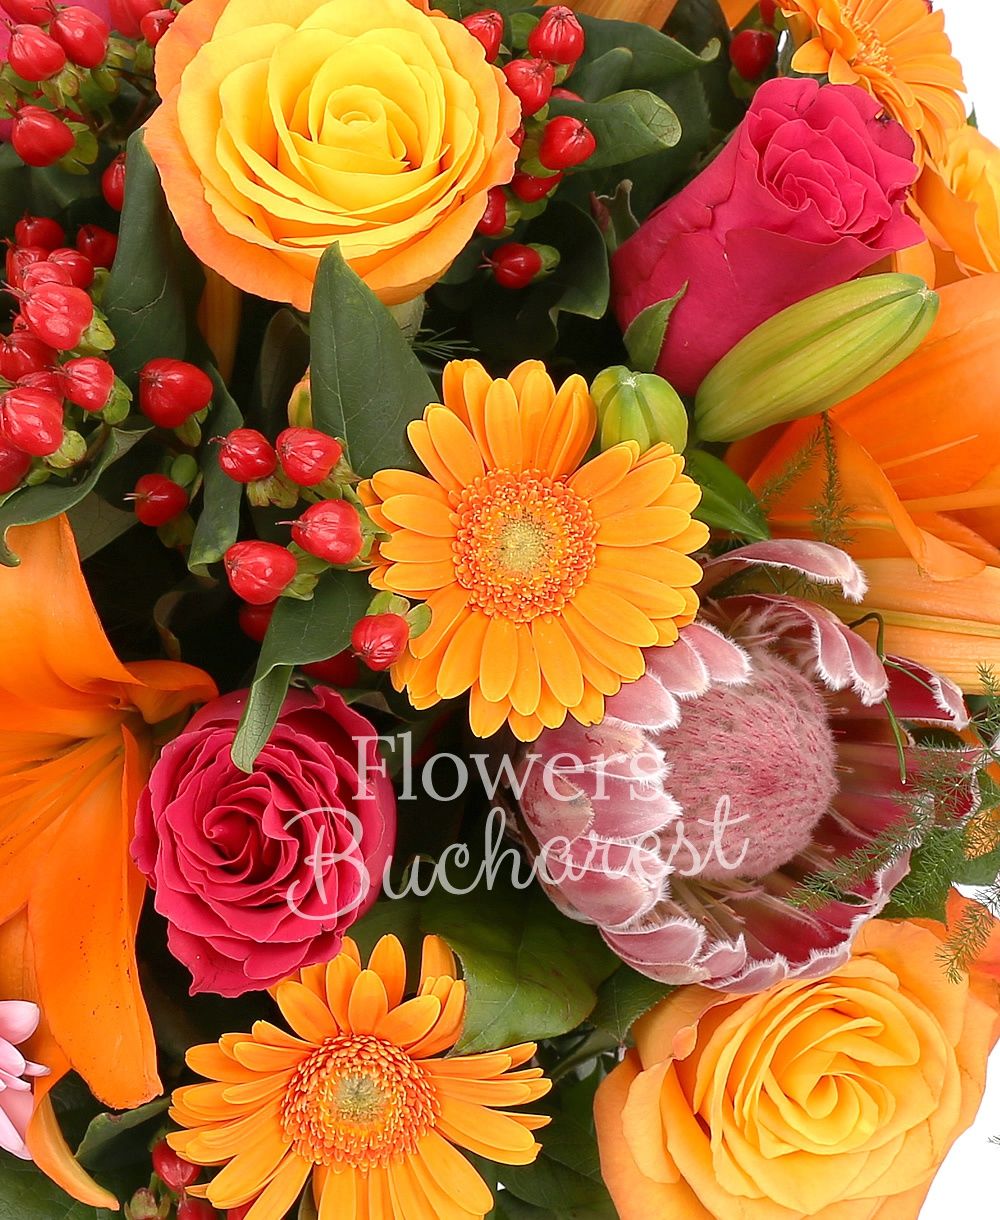 3 orange lilies, 3 proteea, 5 orange roses, 3 cyclam roses, 3 pink gerbera, 5 orange gerbera, 3 leucospermum, 5 hypericum, greenery